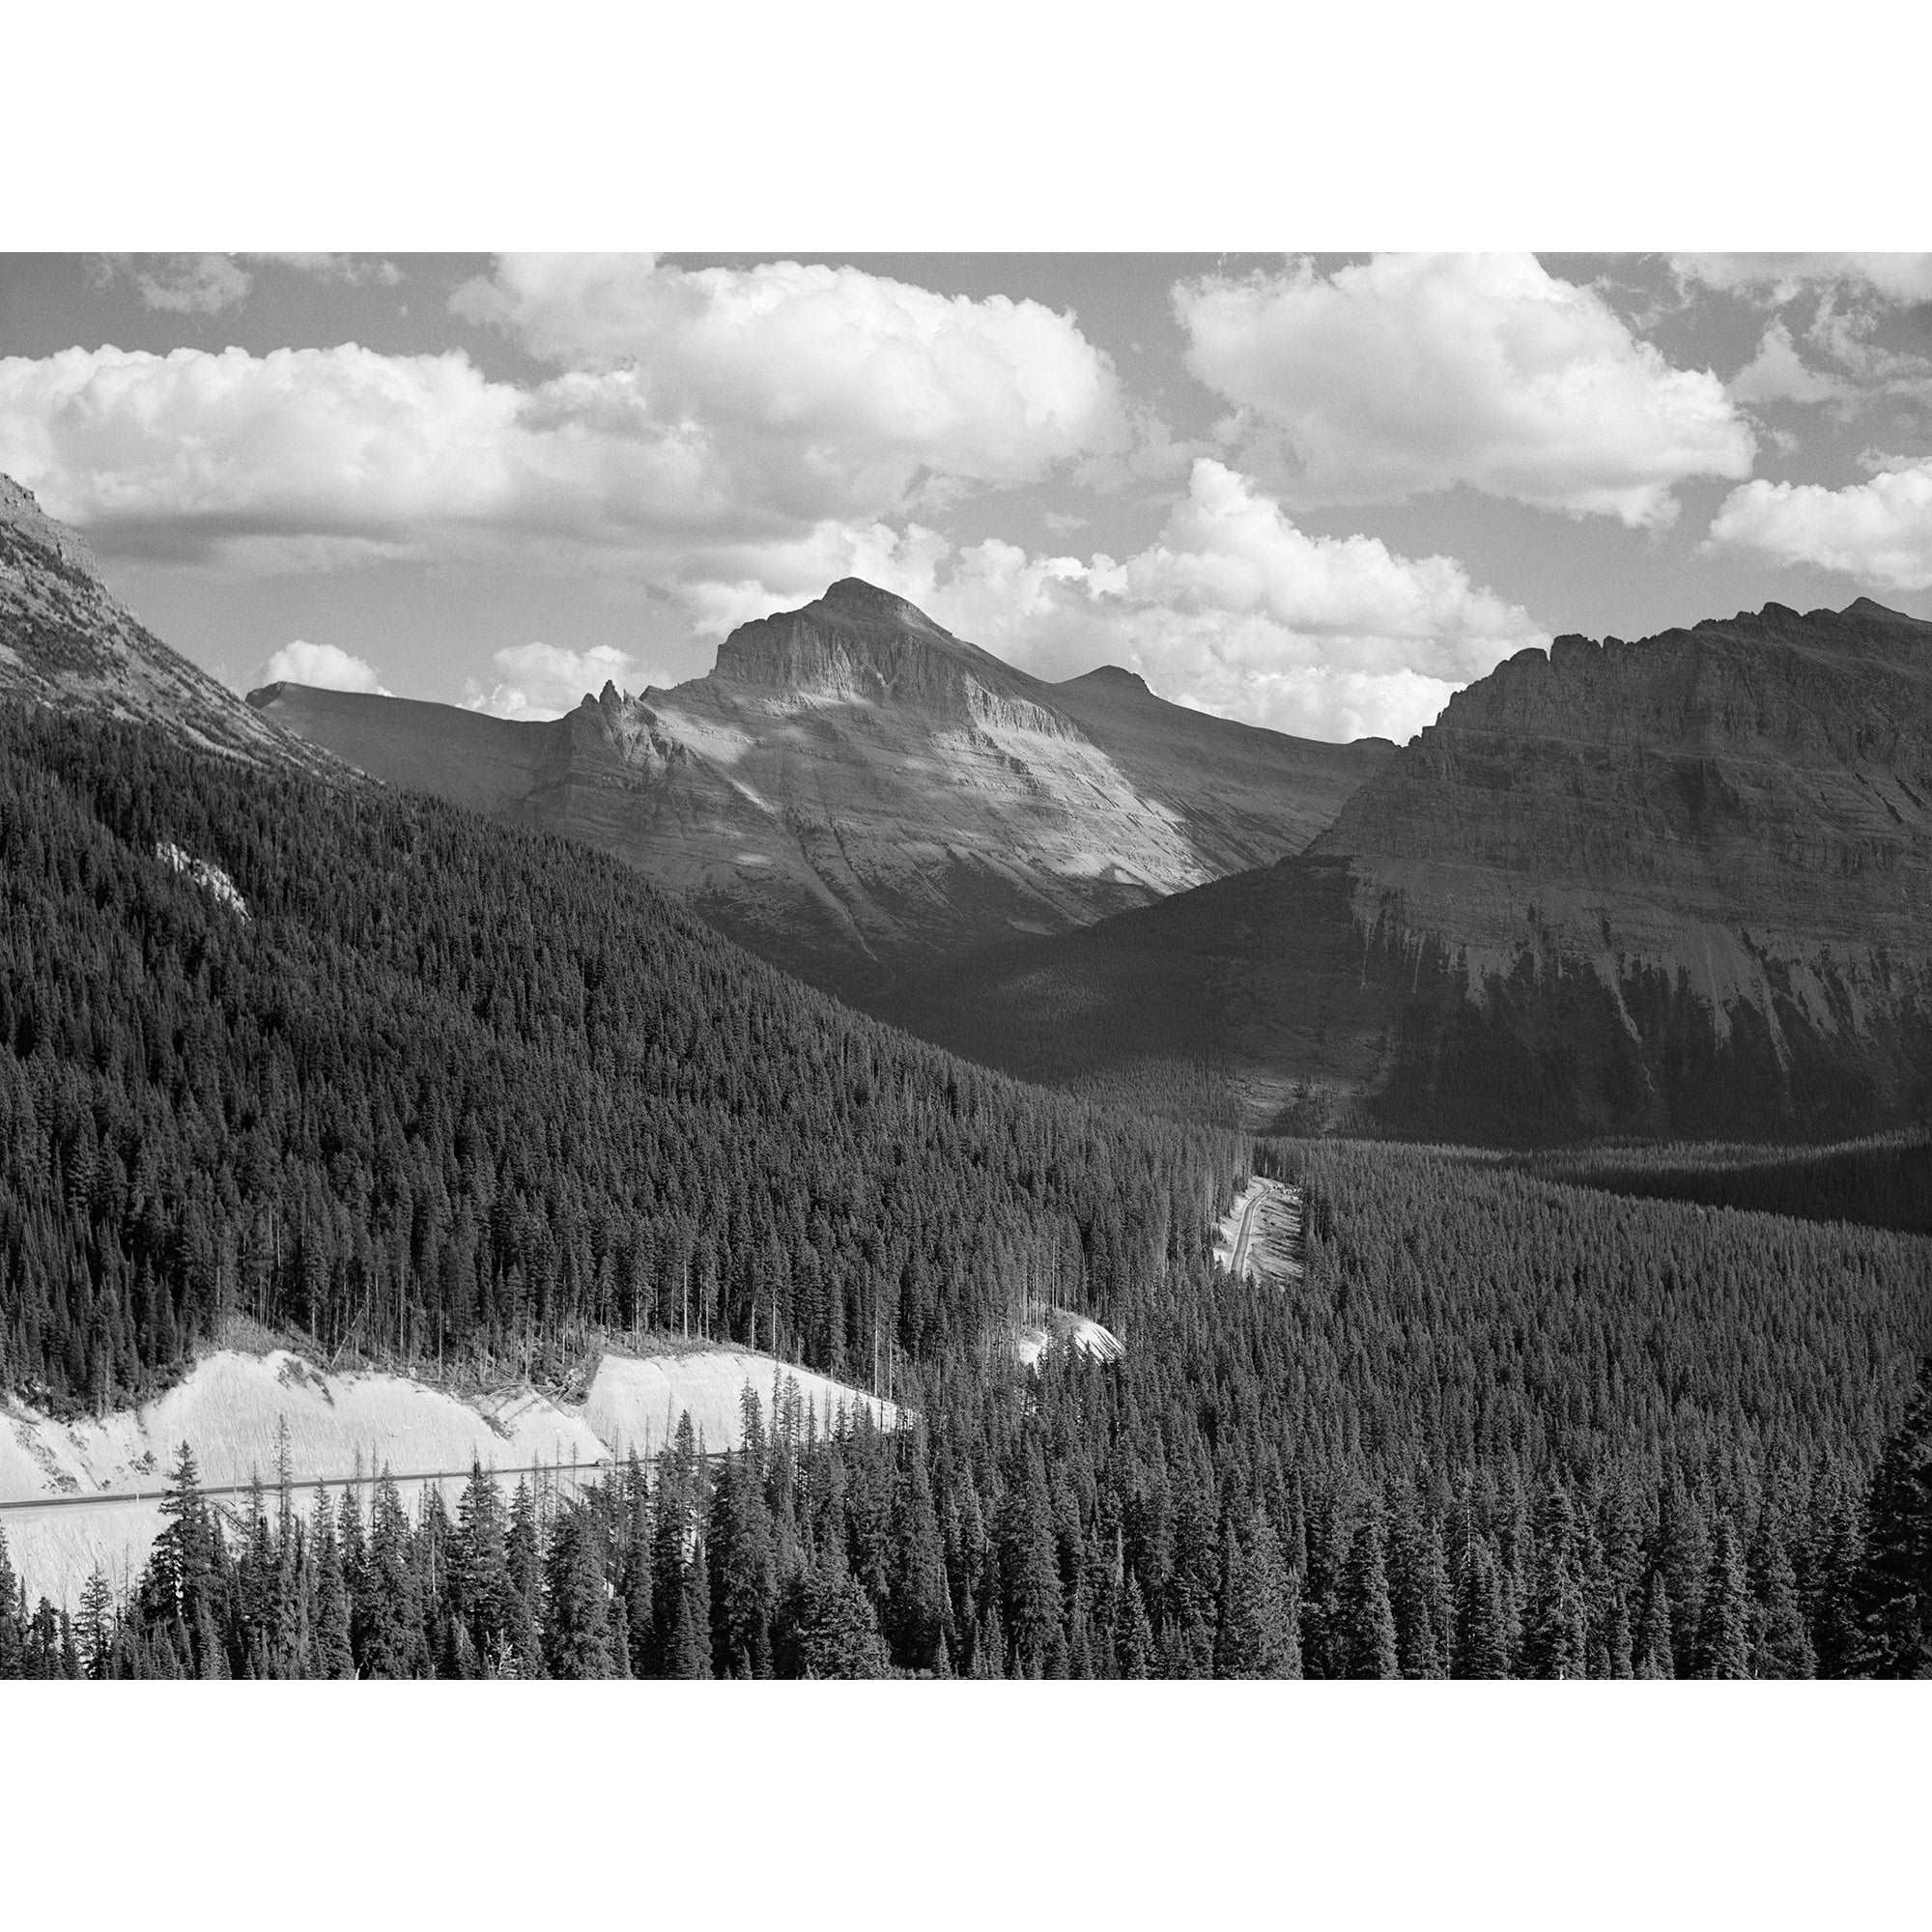 A vintage landscape photograph of mountains in Glacier National Park